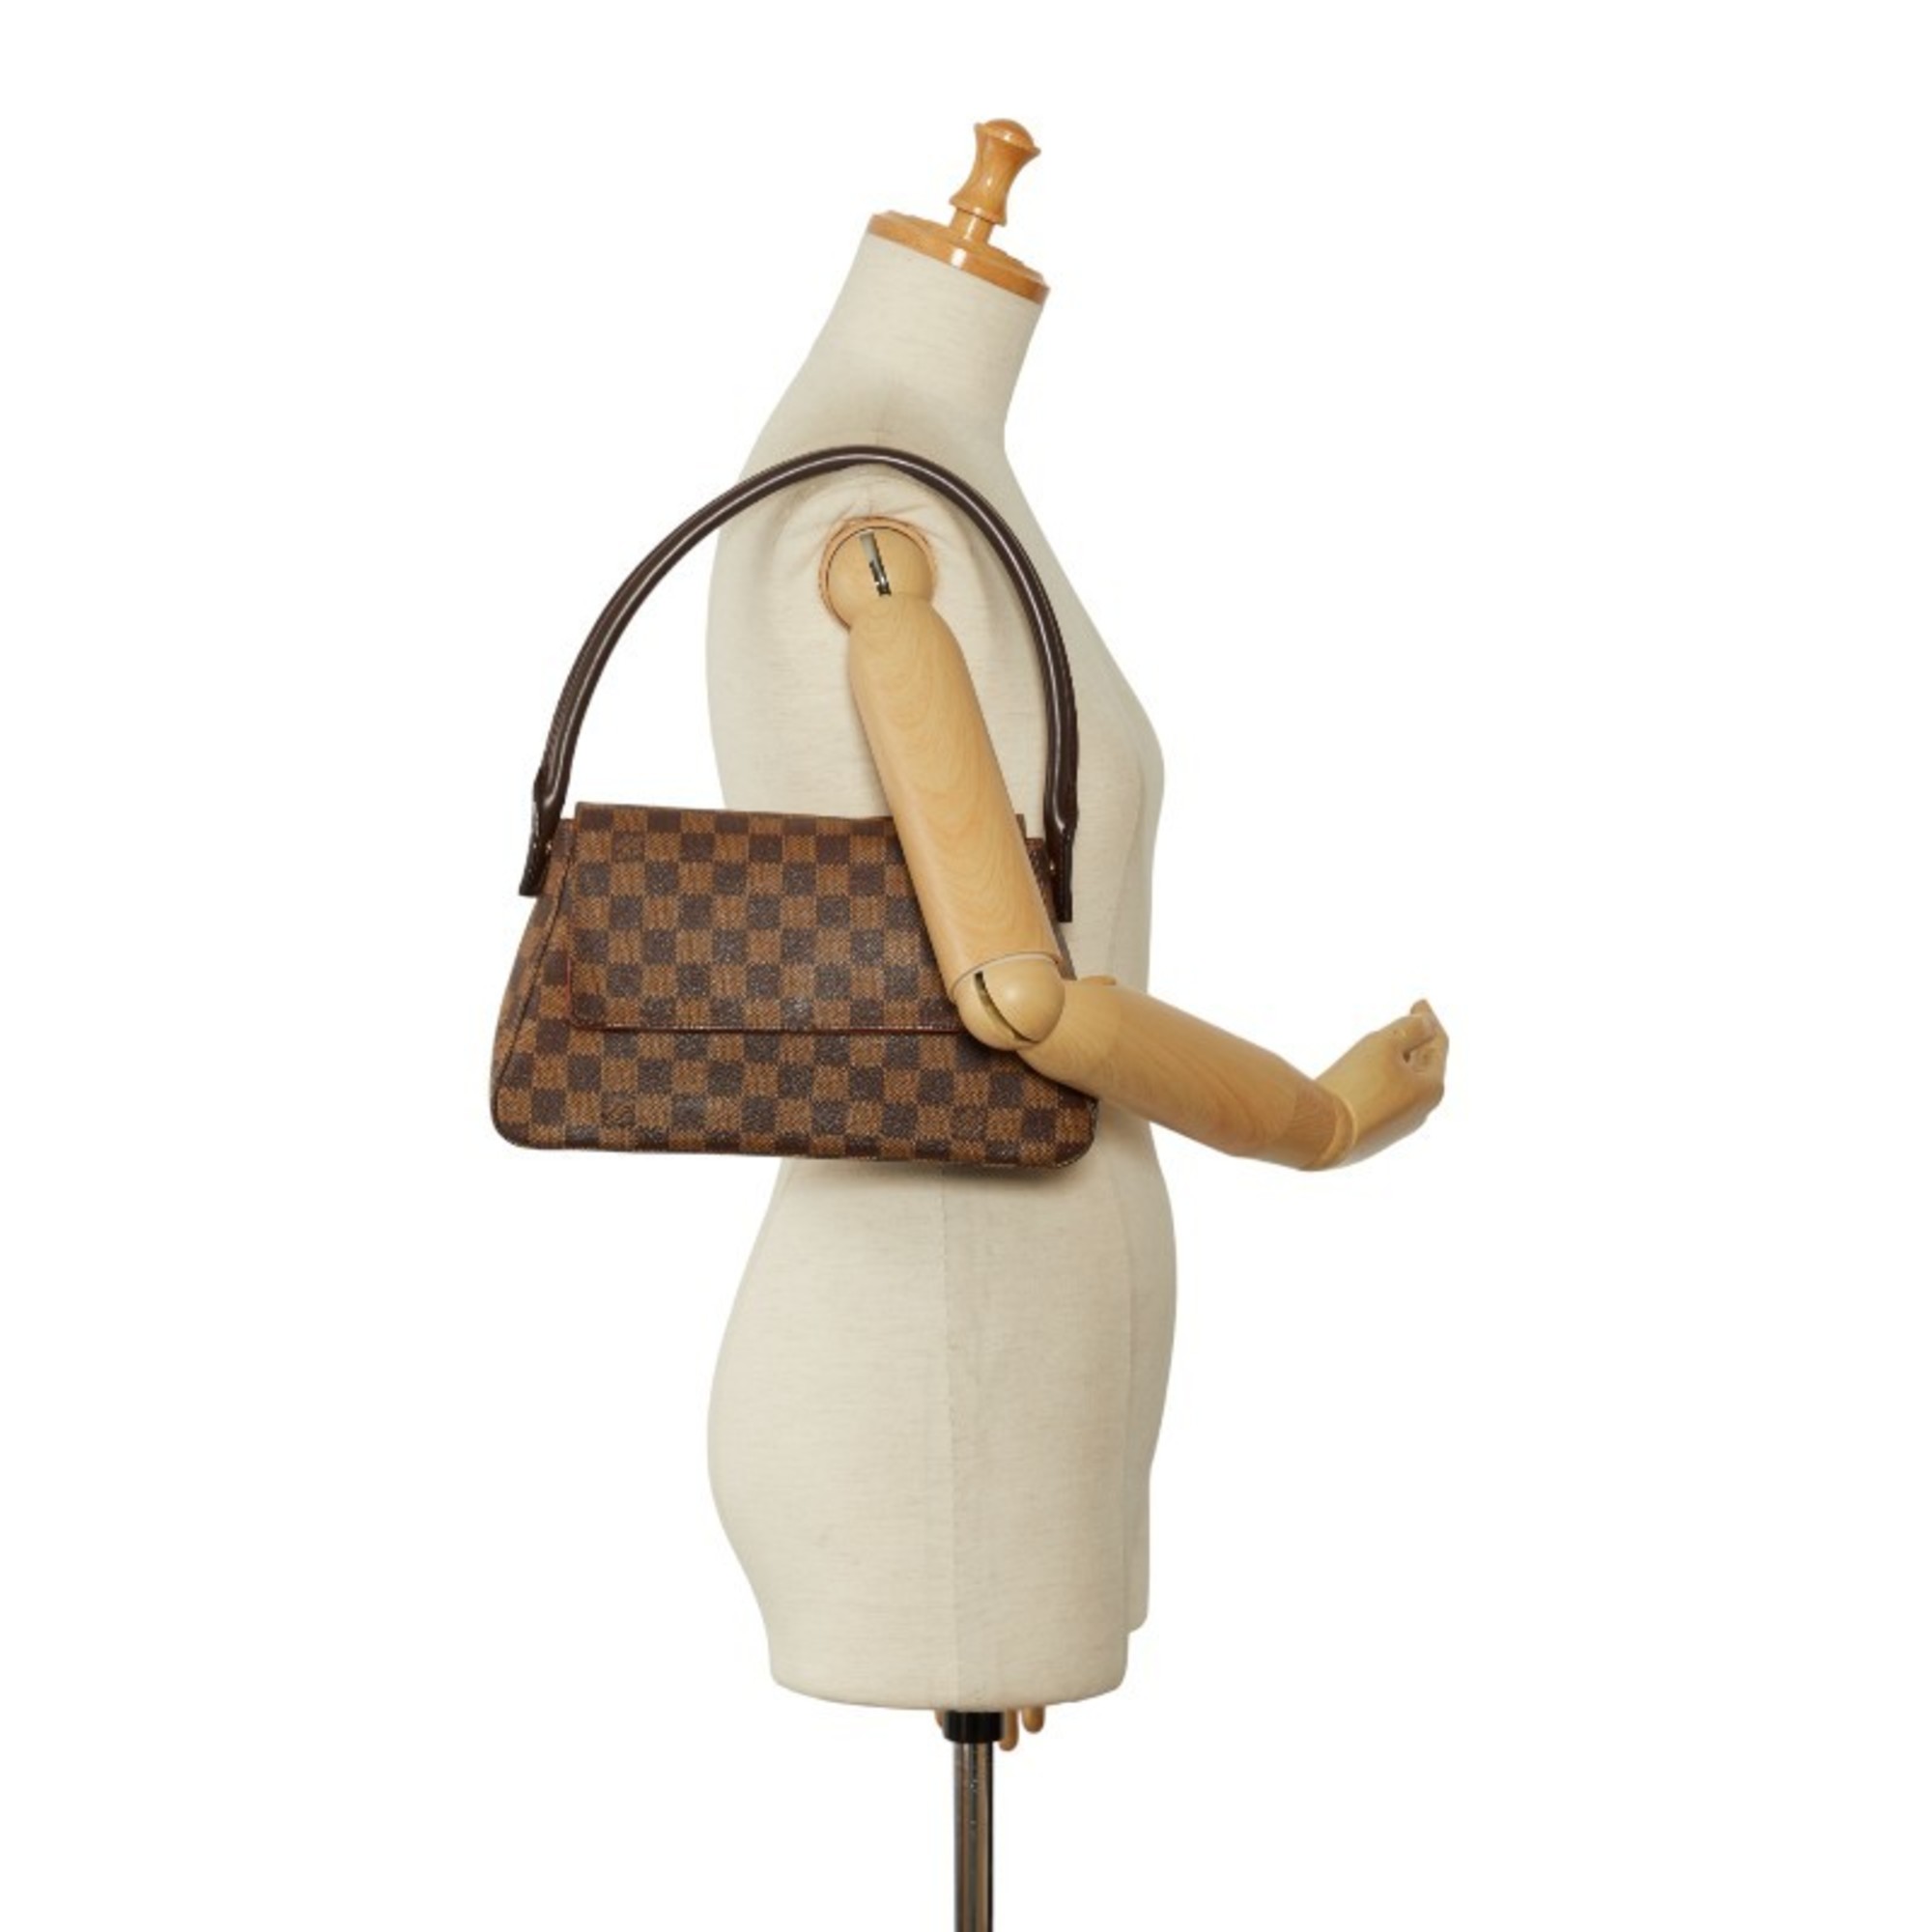 Louis Vuitton Damier Looping Special Order Handbag Shoulder Bag N51148 Brown PVC Leather Women's LOUIS VUITTON